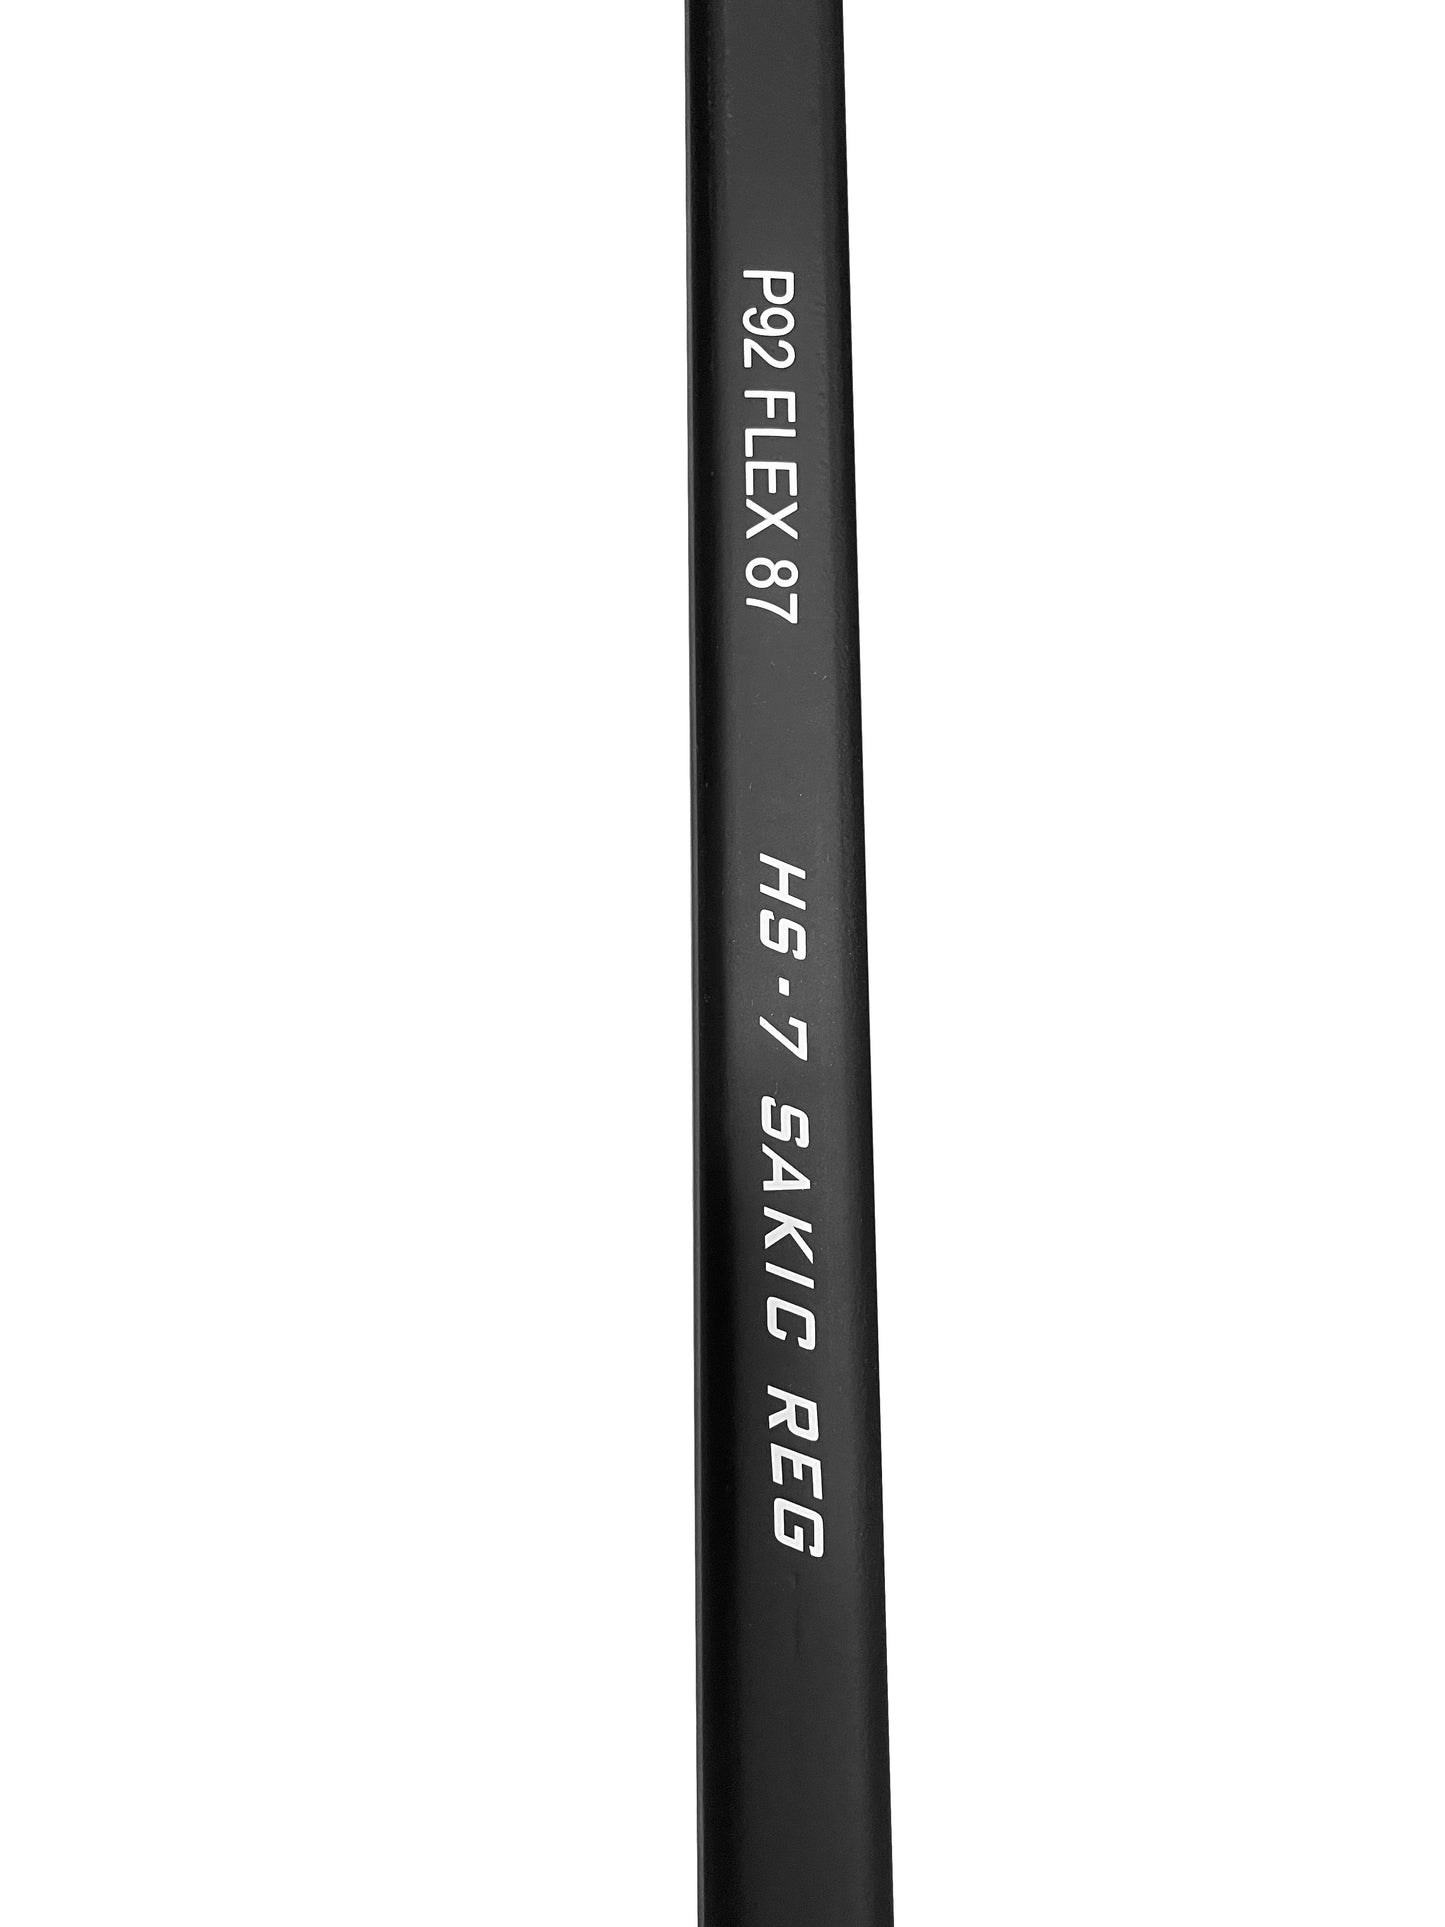 HS-7 High Modulus Carbon Hockey Stick